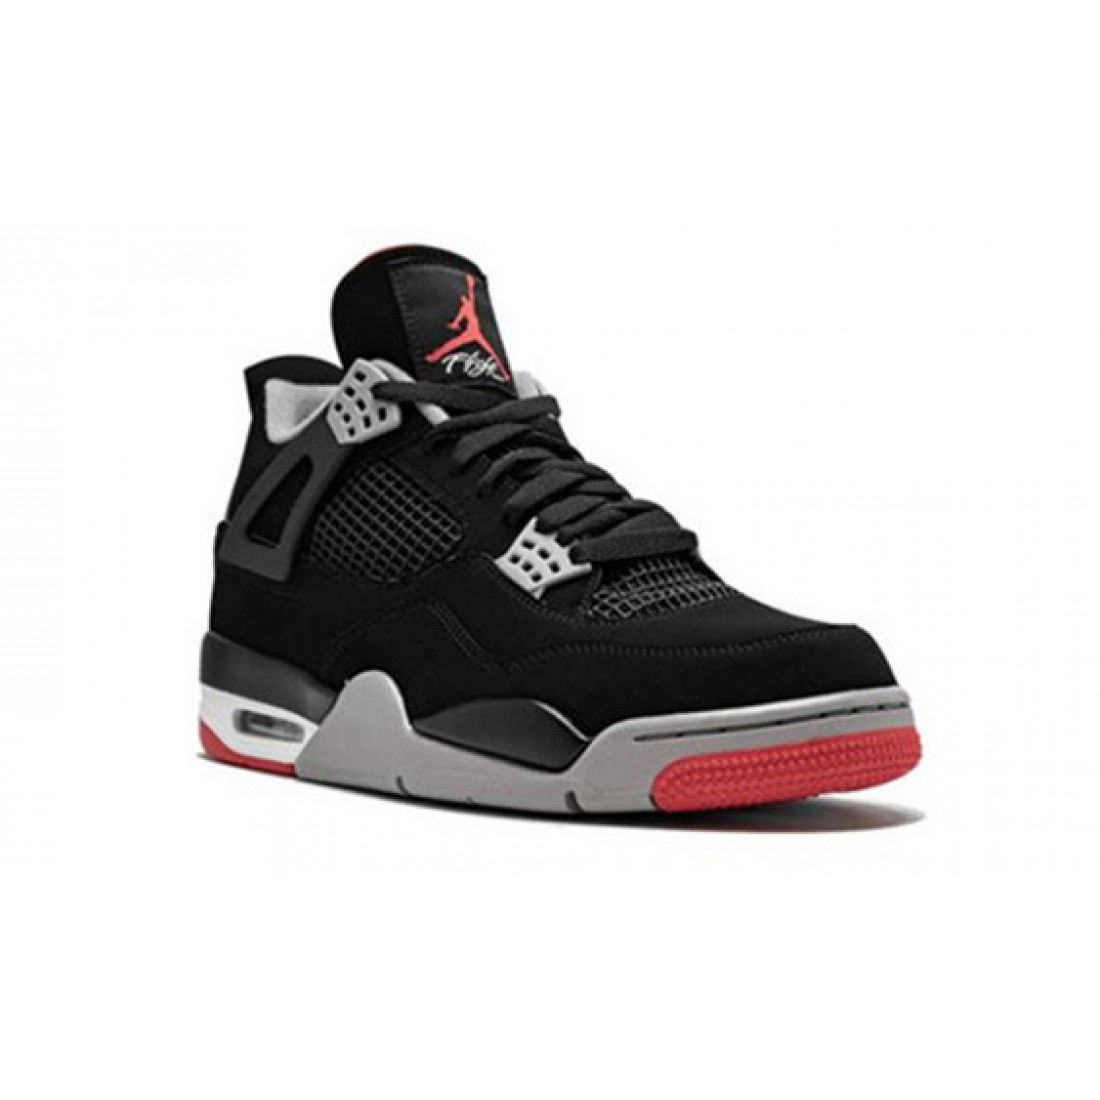 Rep Shoes Jordan 32 High Bred BLACK/CEMENT GREY BLACK 308497 060 Cheap